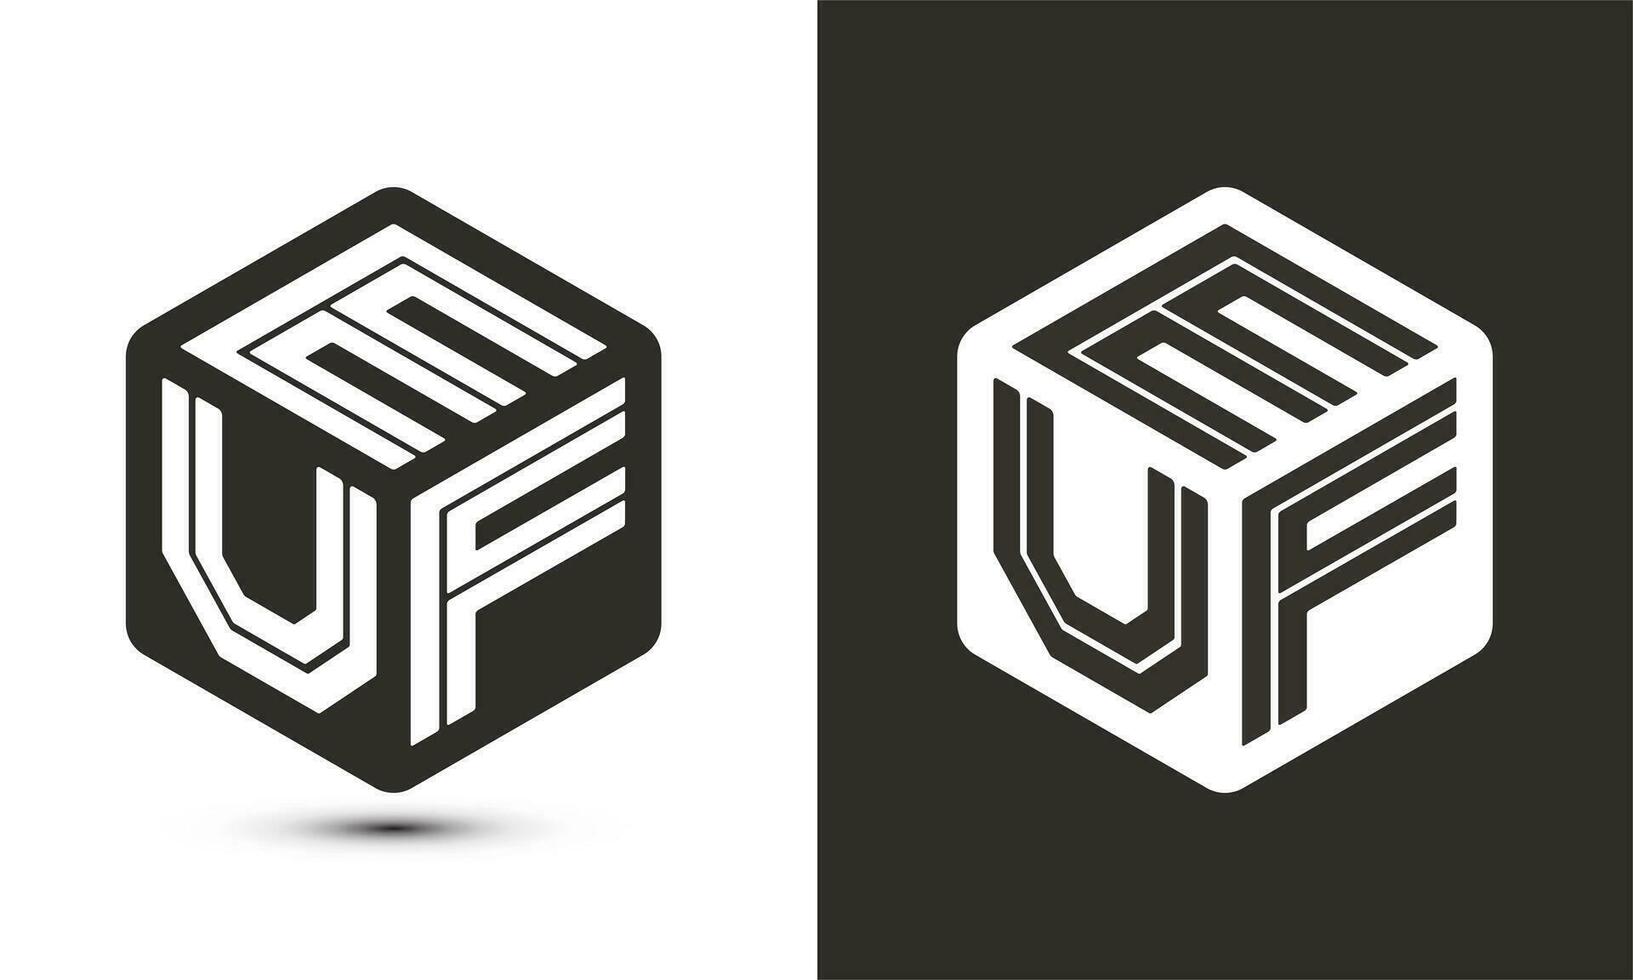 euf letra logo diseño con ilustrador cubo logo, vector logo moderno alfabeto fuente superposición estilo.